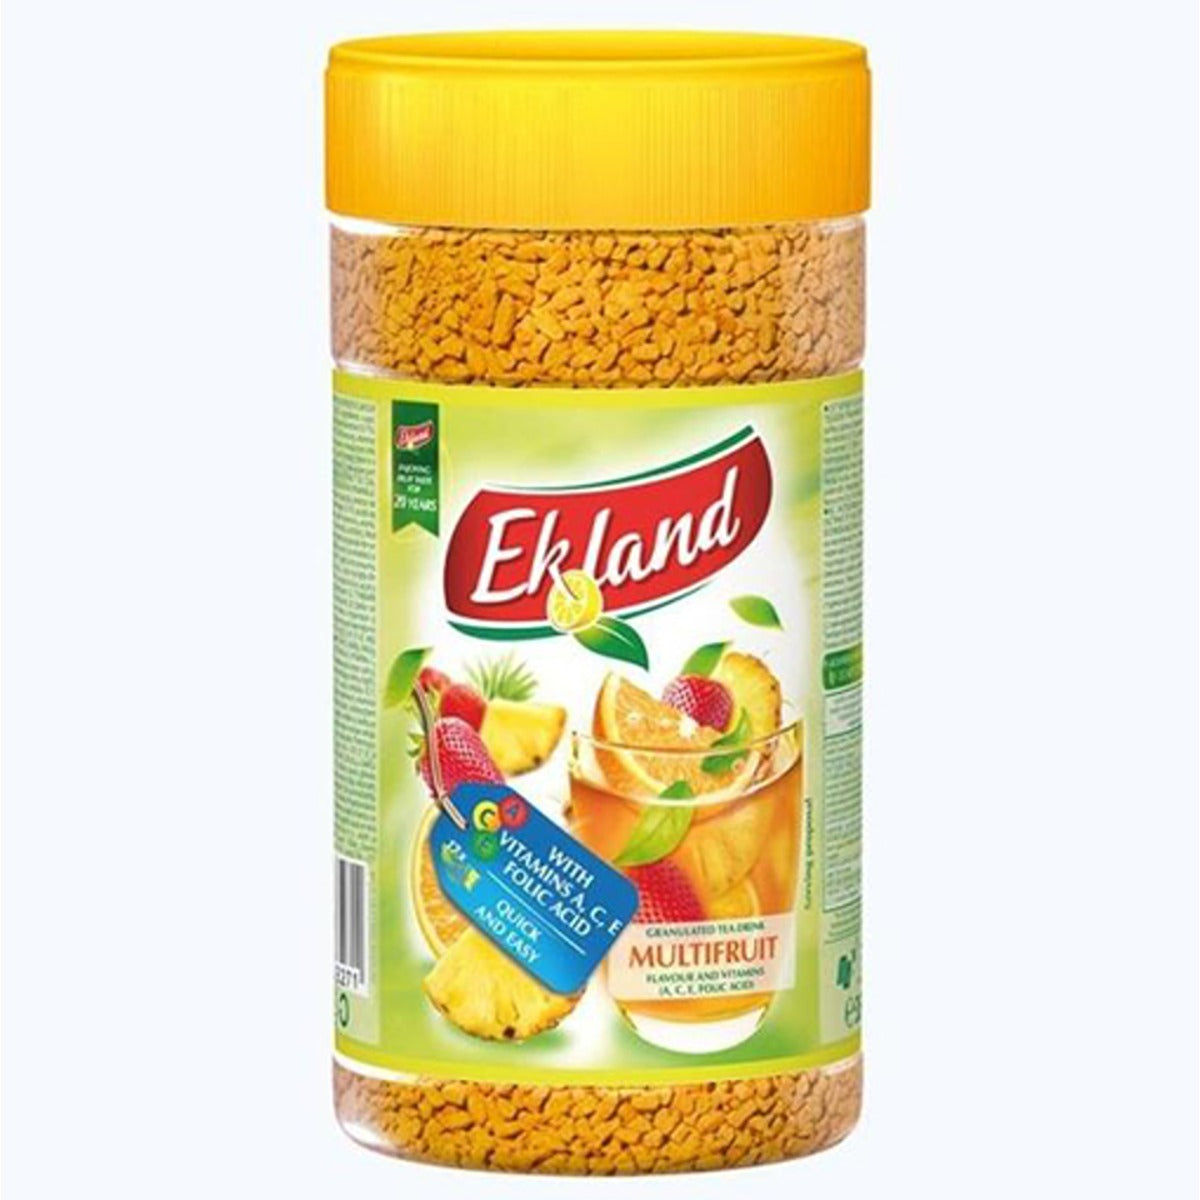 A jar of Ekoland - Multifruit Instant Tea - 350g.